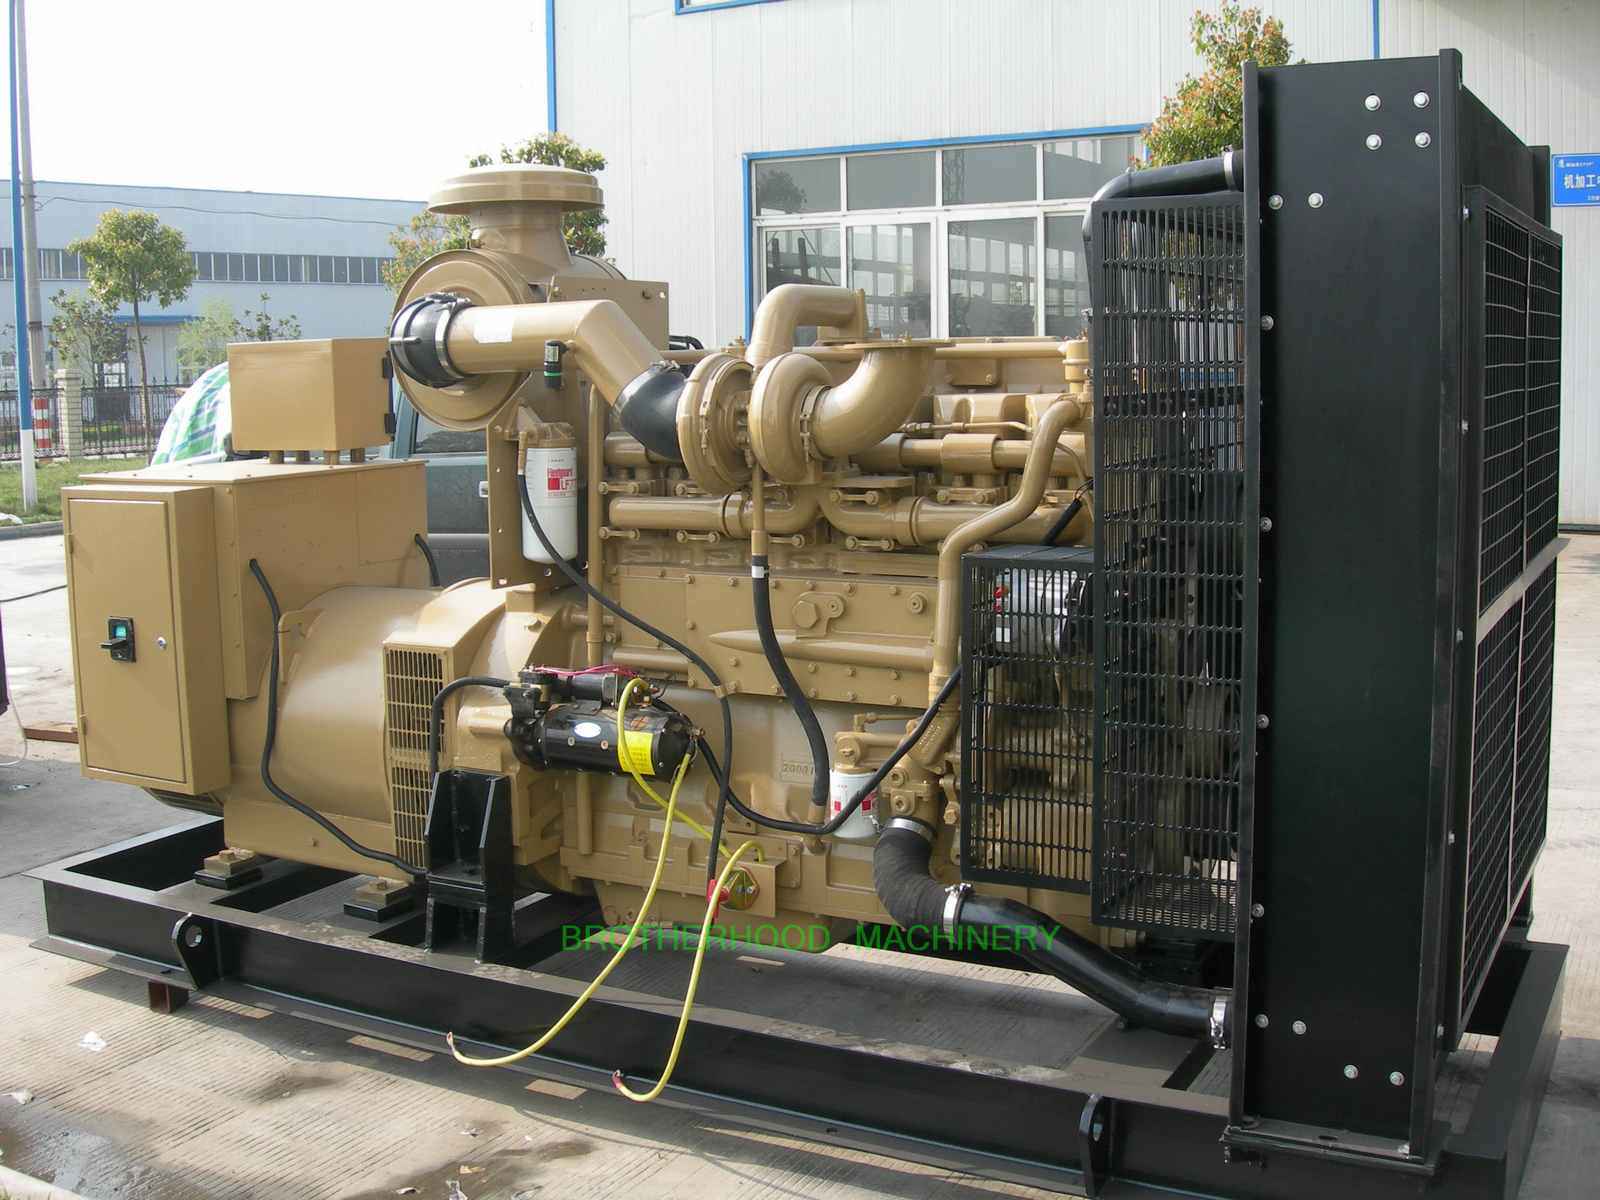 Natural Gas Generator 75kw